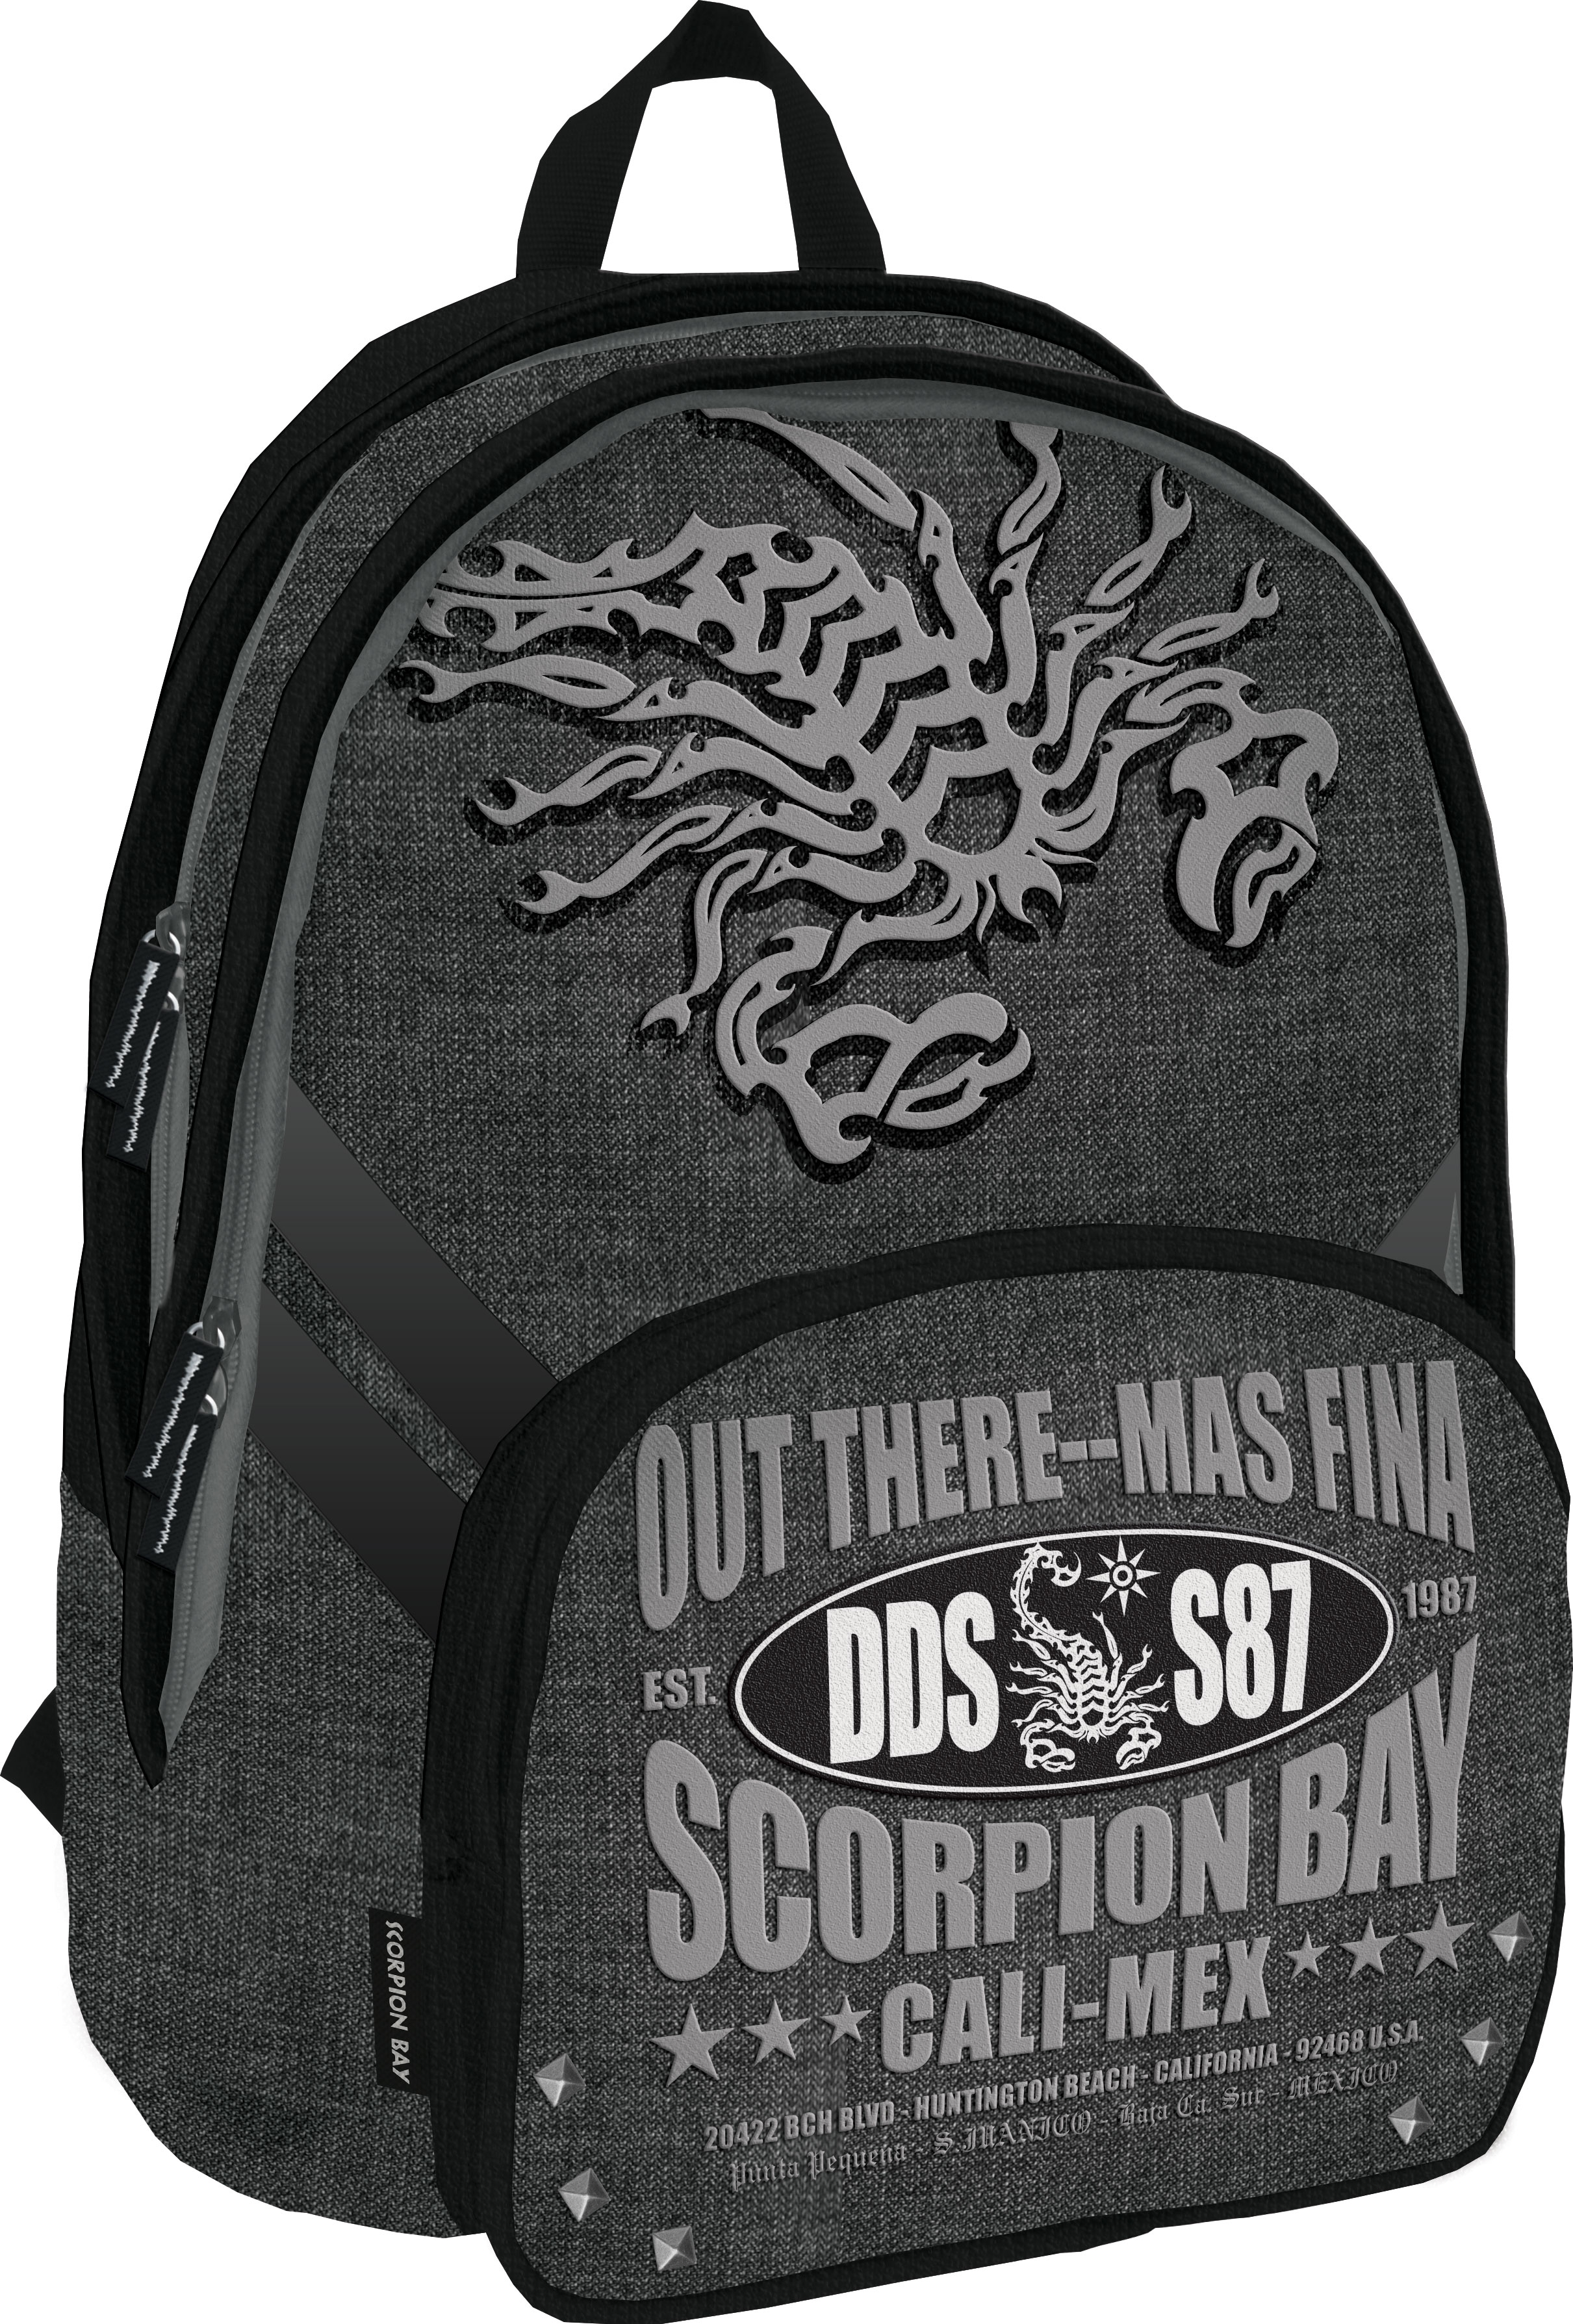 Рюкзак Scorpion Bay - Чебоксары 